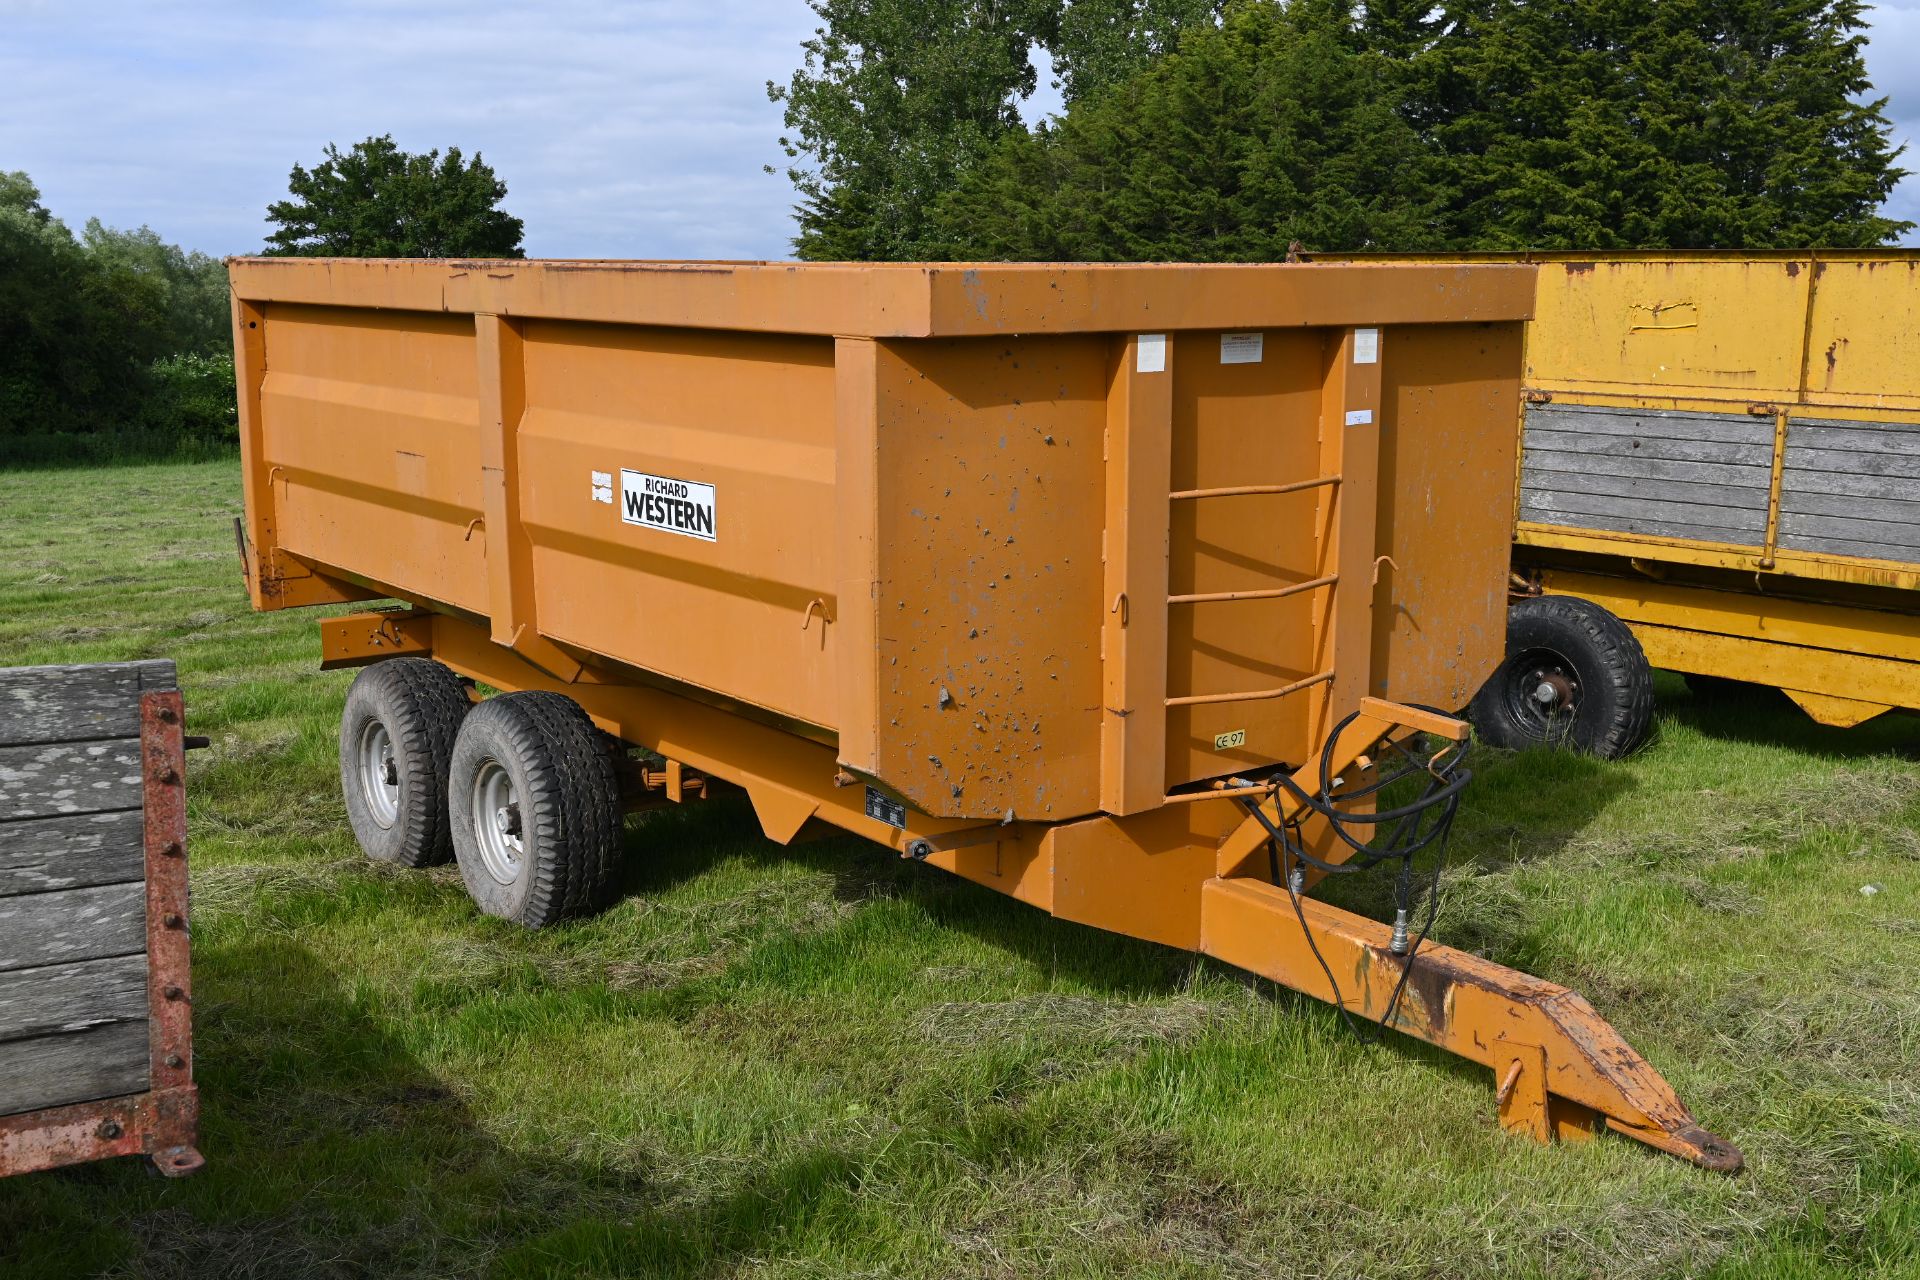 Richard Weston 8 ton grain trailer